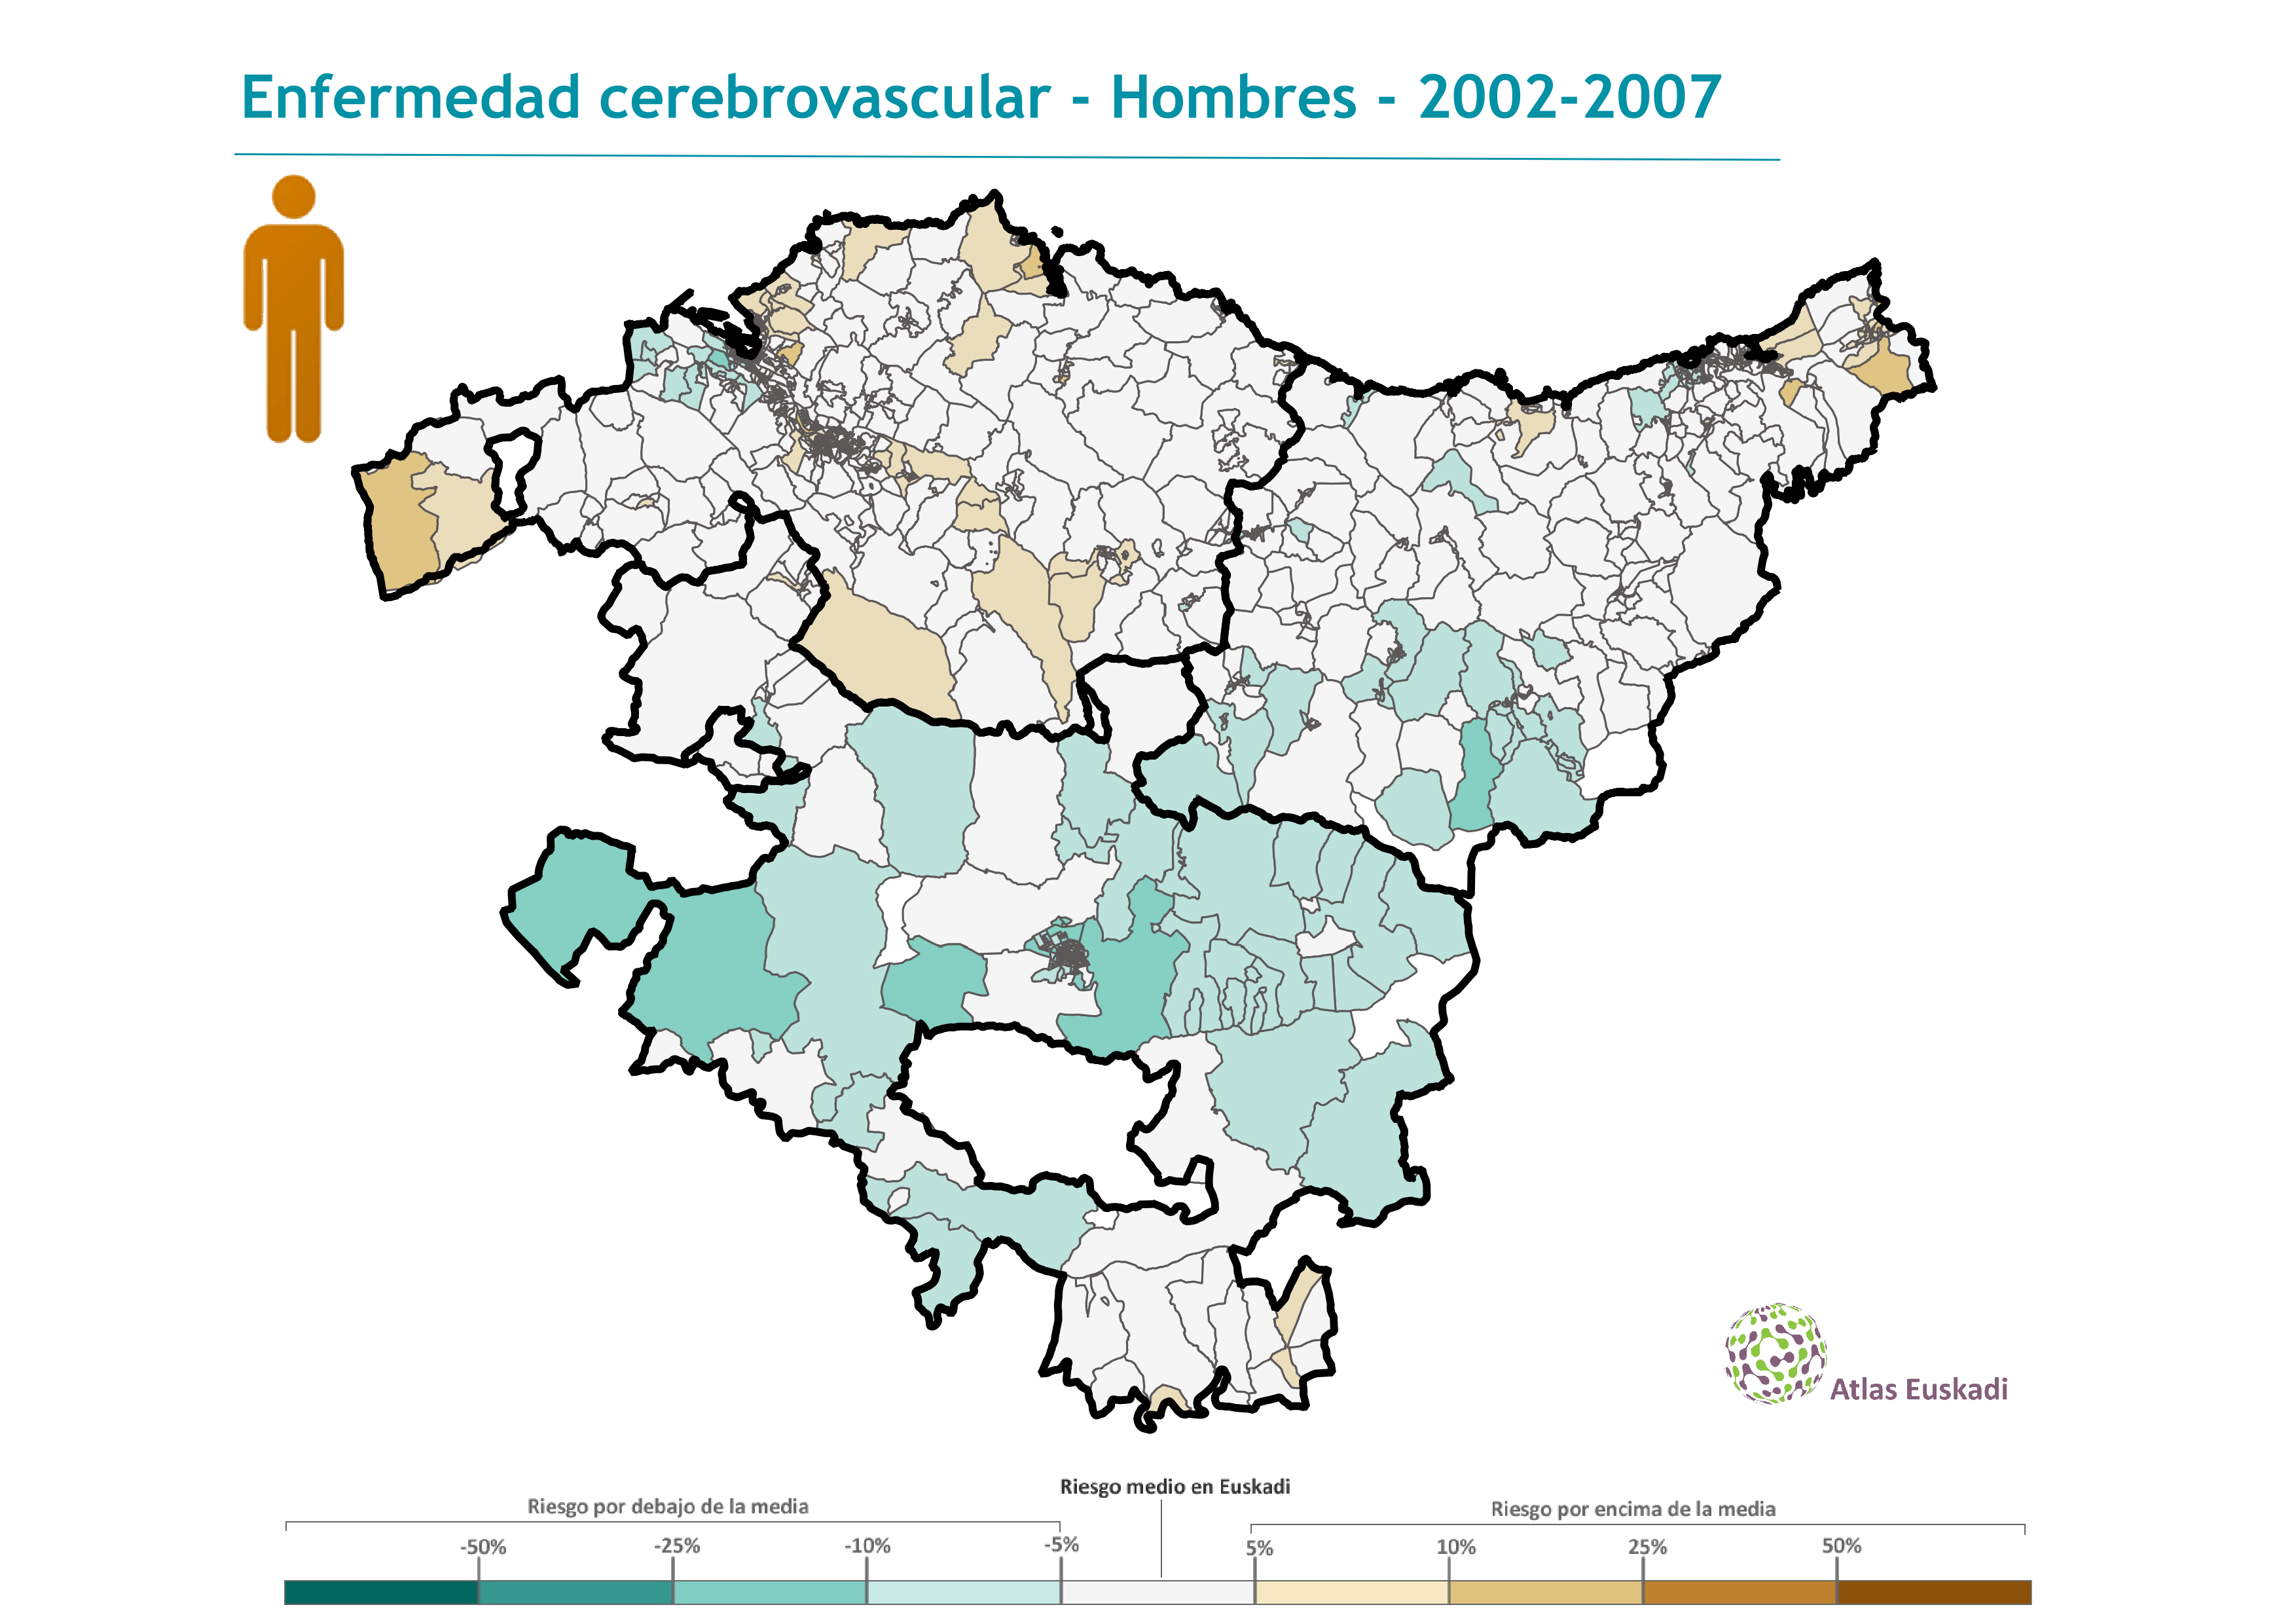 Enfermedad cerebrovascular hombres  2002-2007 Euskadi